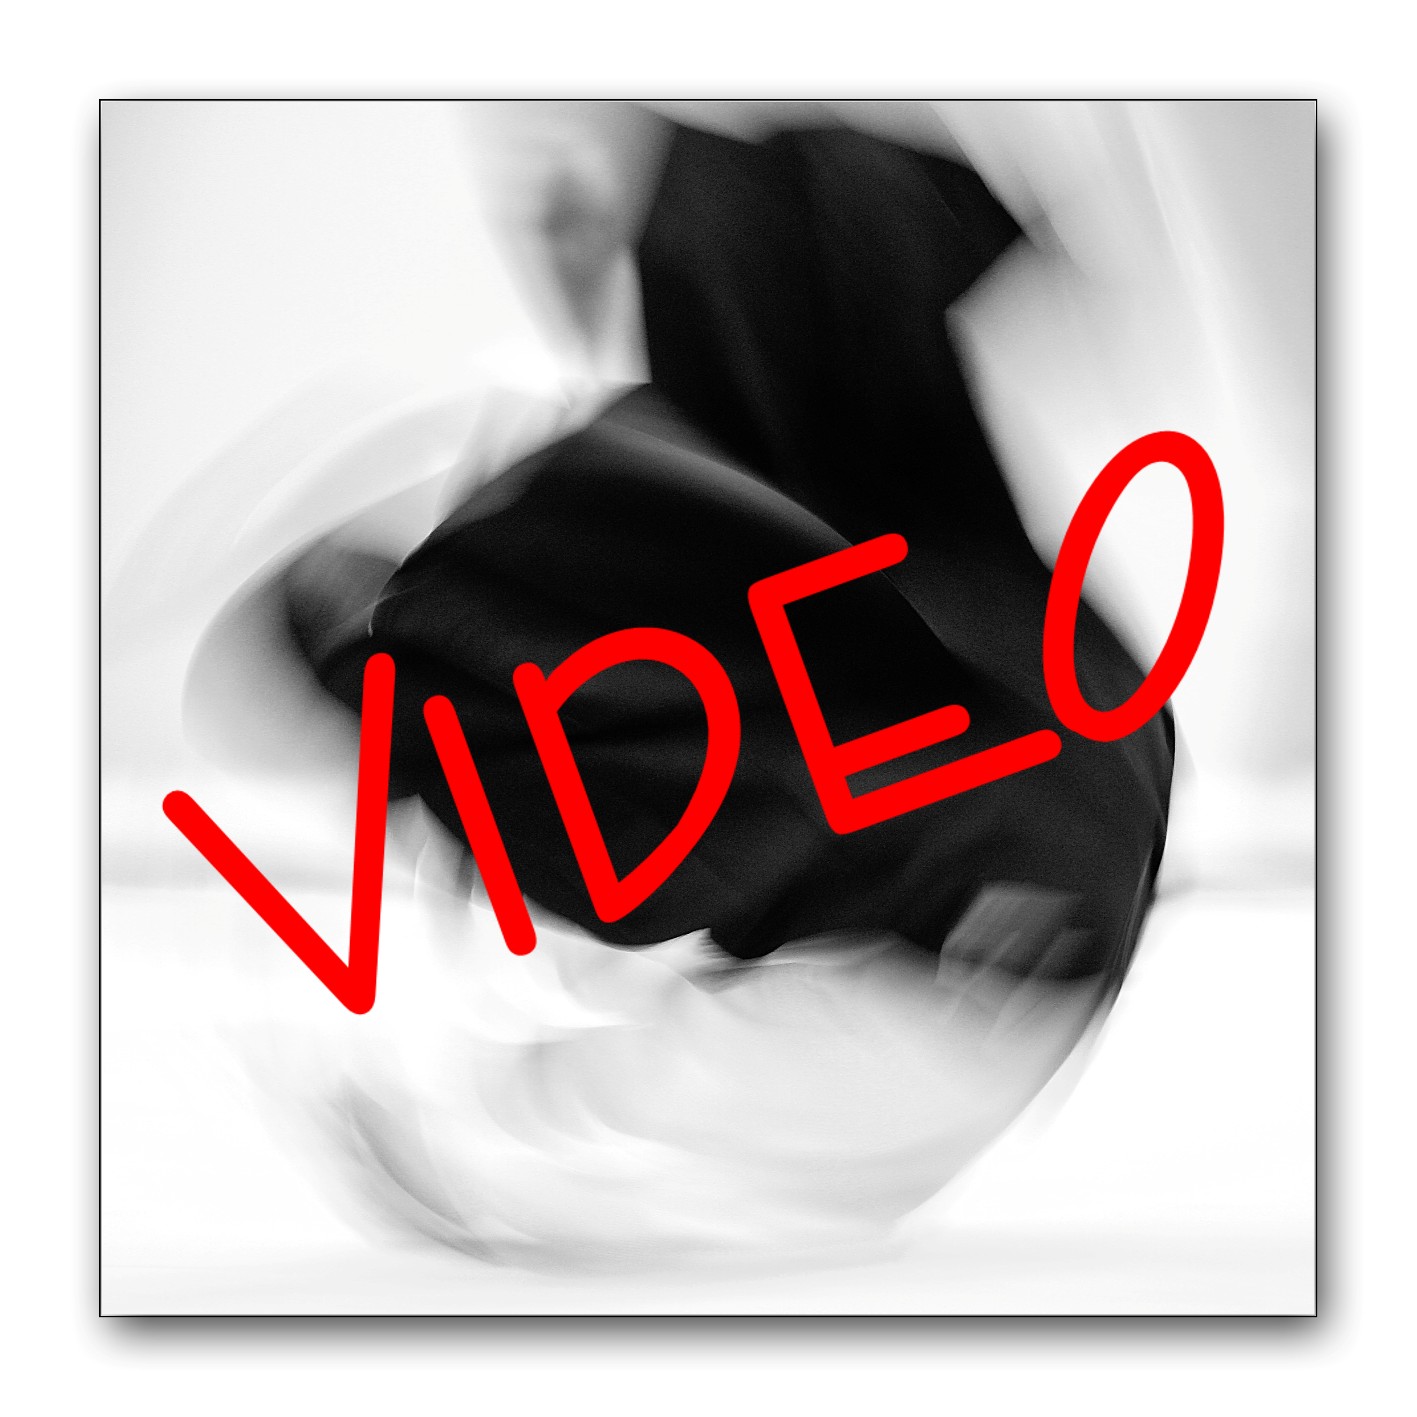 090124 Vignette pour site video Tamura Bedarieux.jpg - 232,88 kB